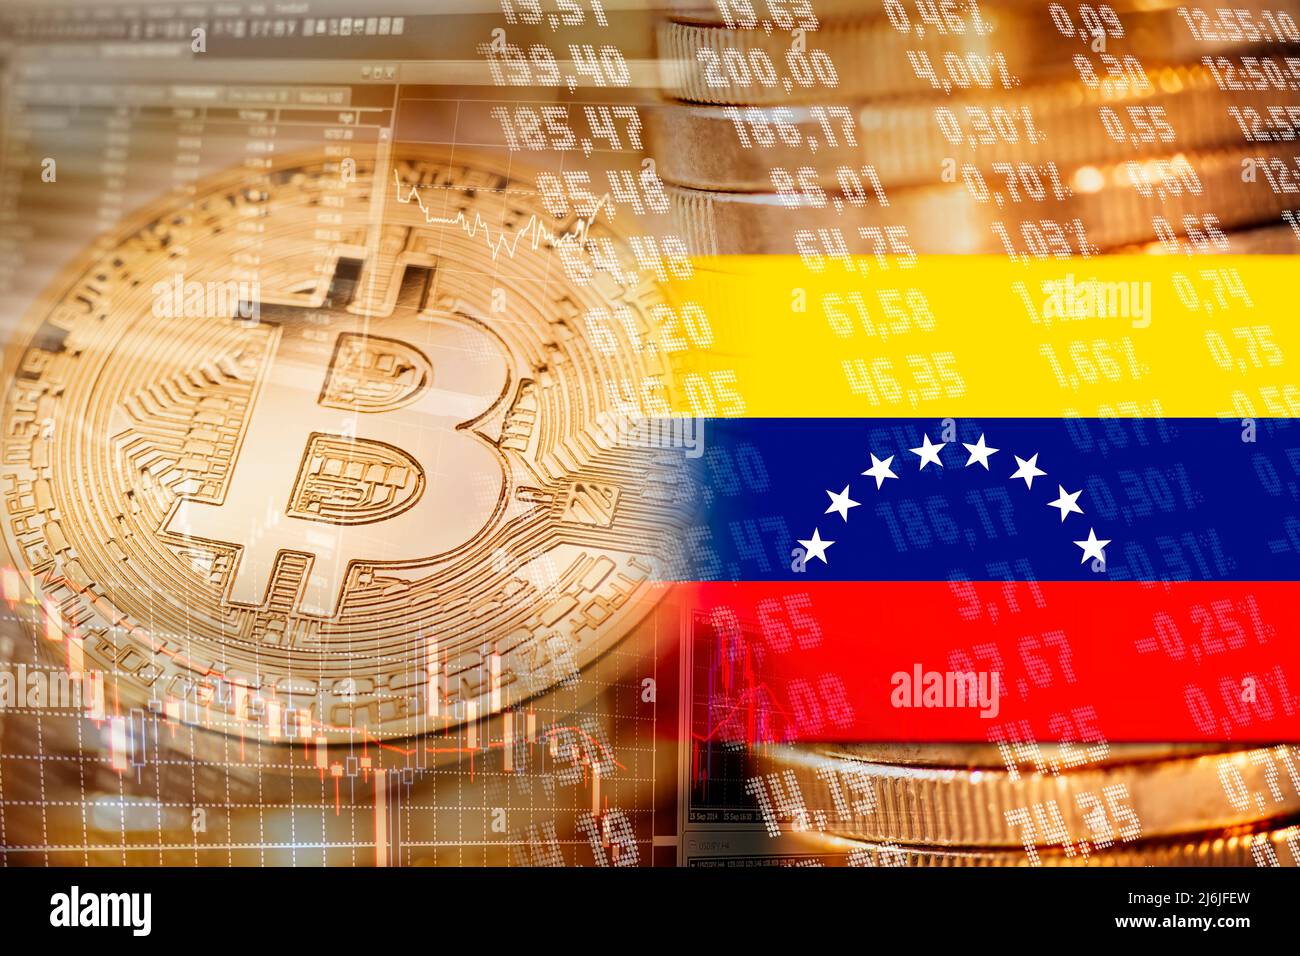 Bitcoin with financial market symbols and flag of Venezuela Stock Photo